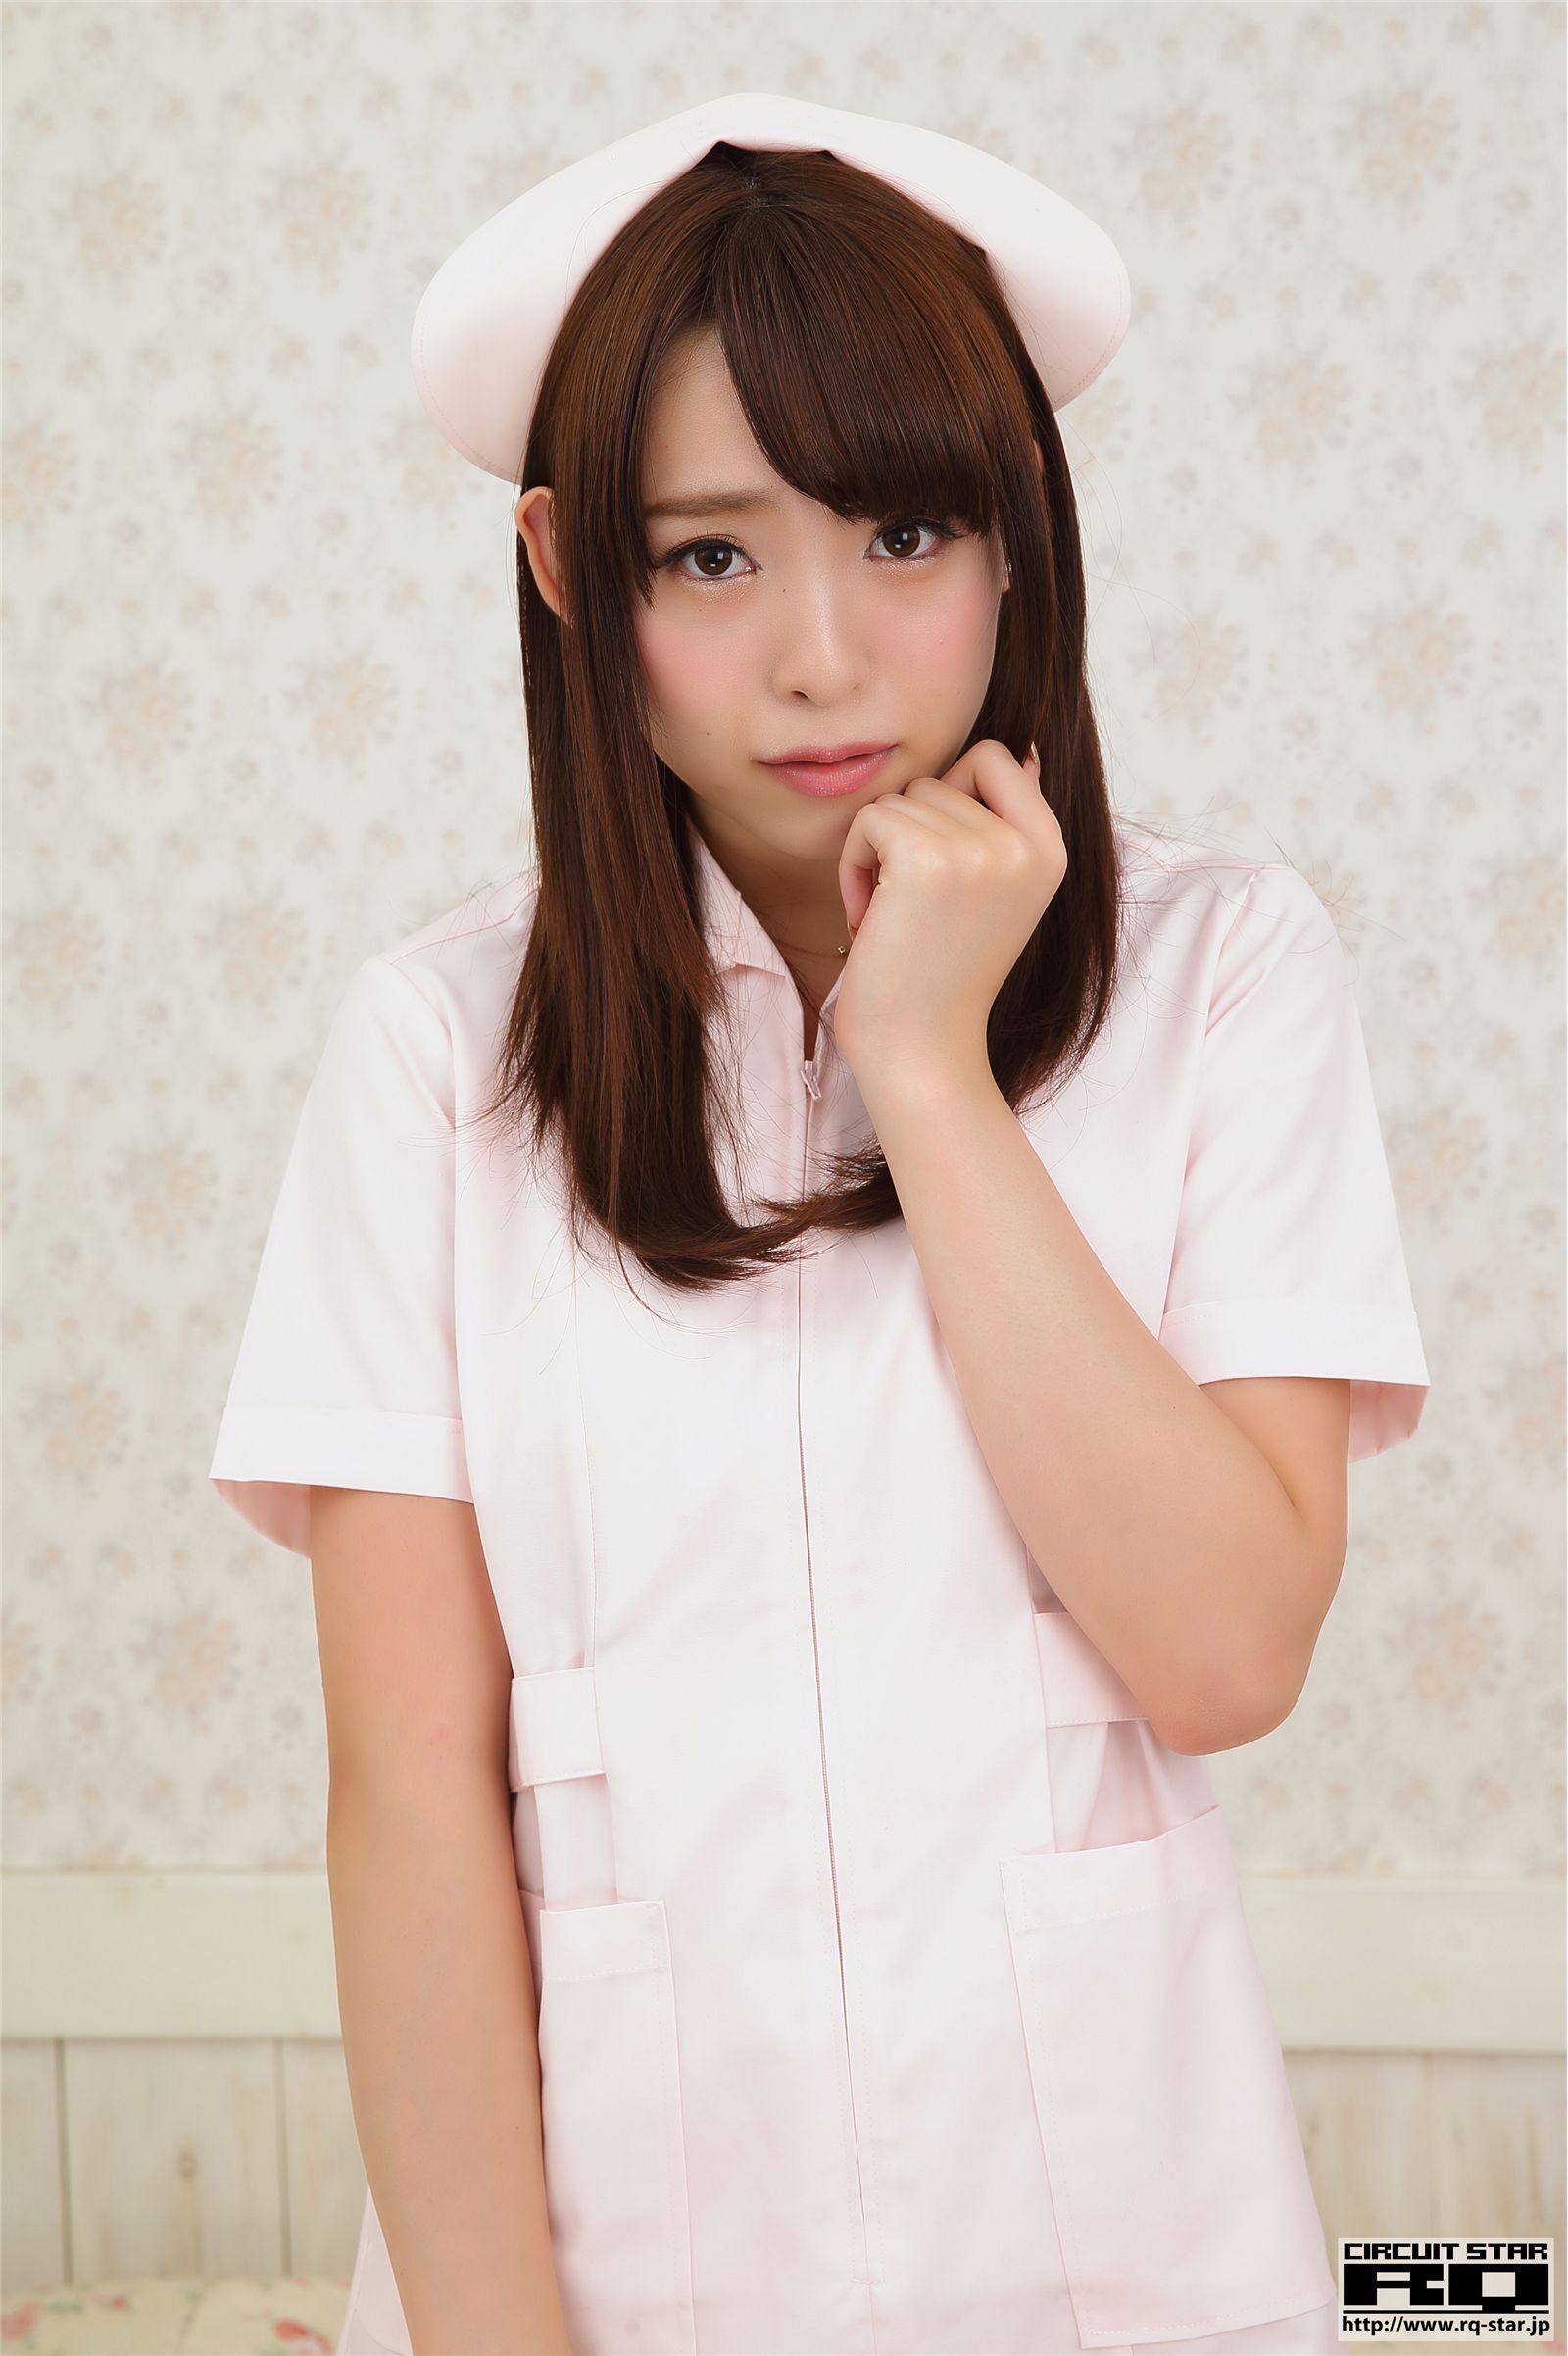 [RQ-STAR]2016.08.12 Mei Ebihara 蛯原メイ Nurse Costume